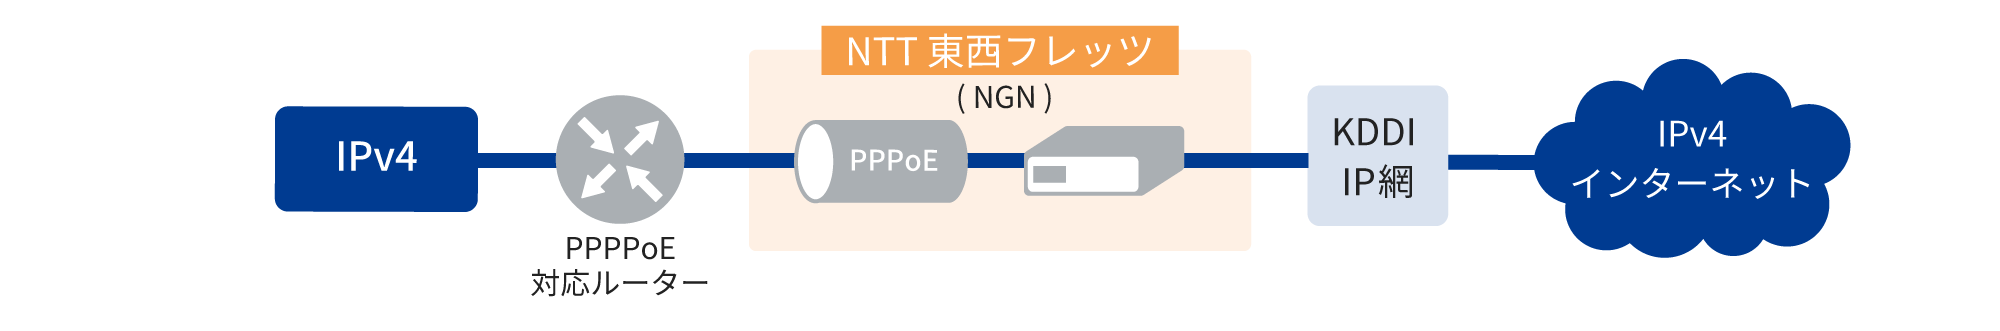 PPPoE接続の構成図